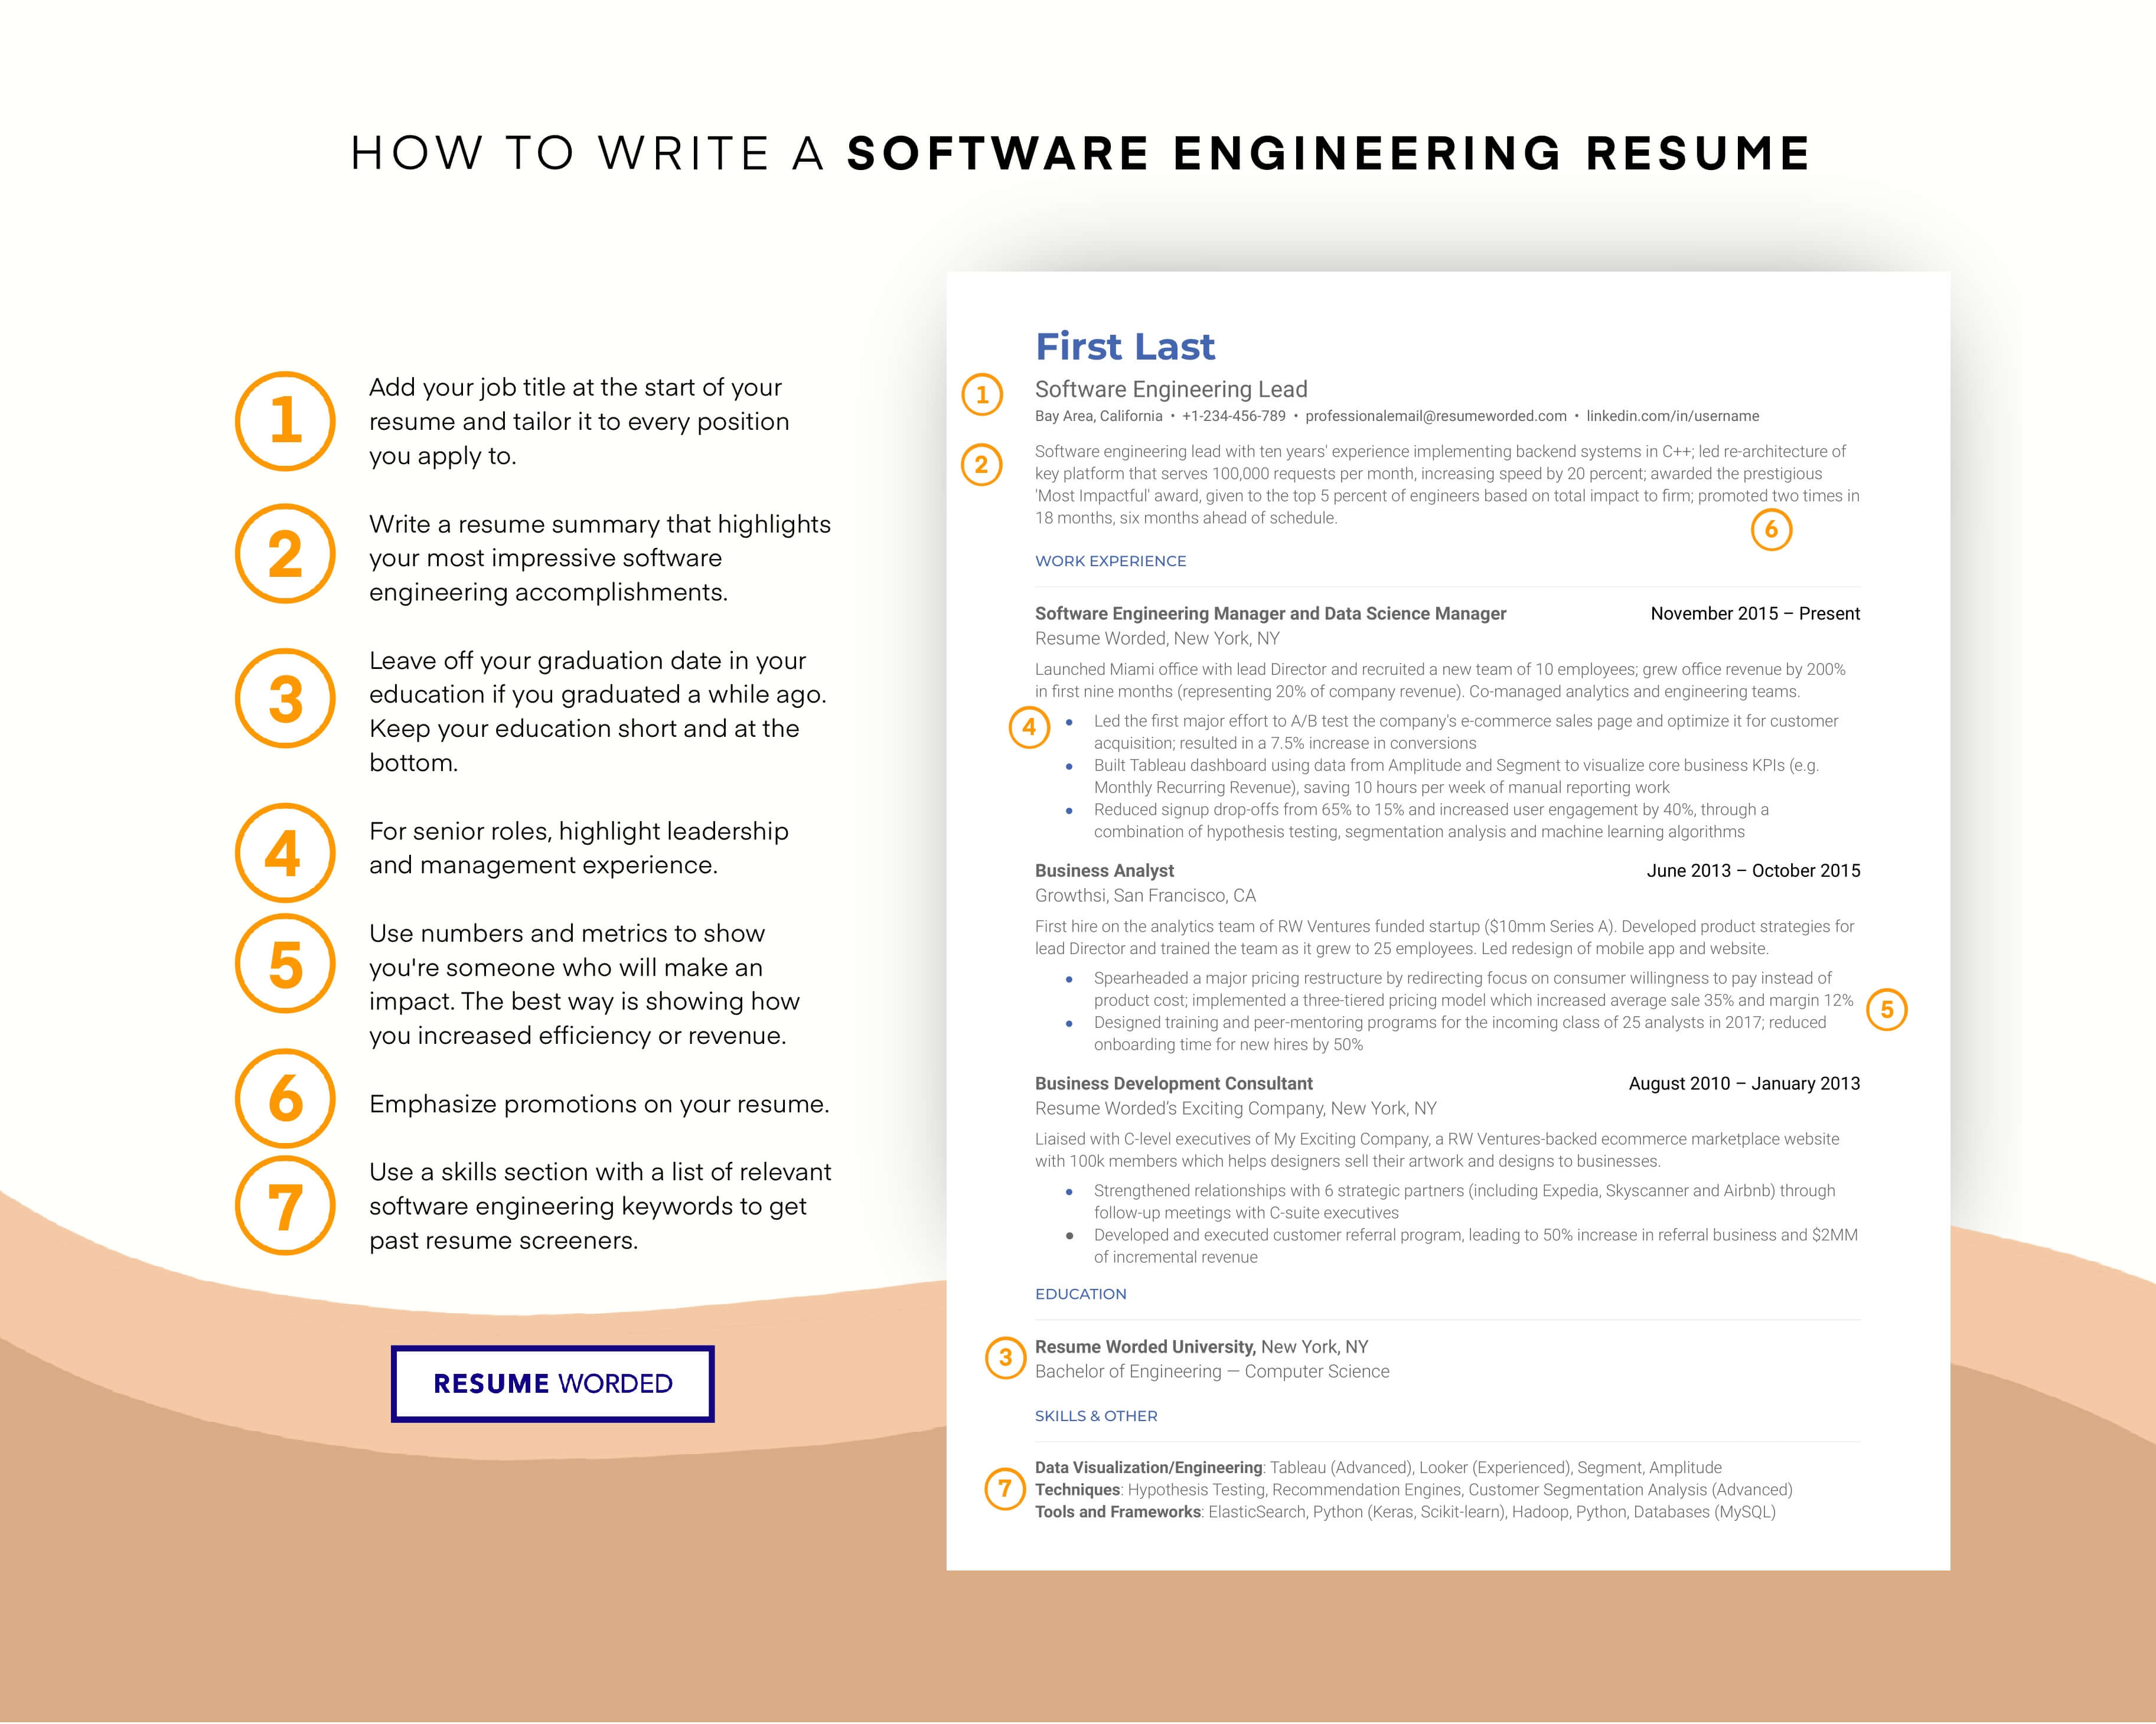 Detail your software proficiencies - Structural Engineer CV